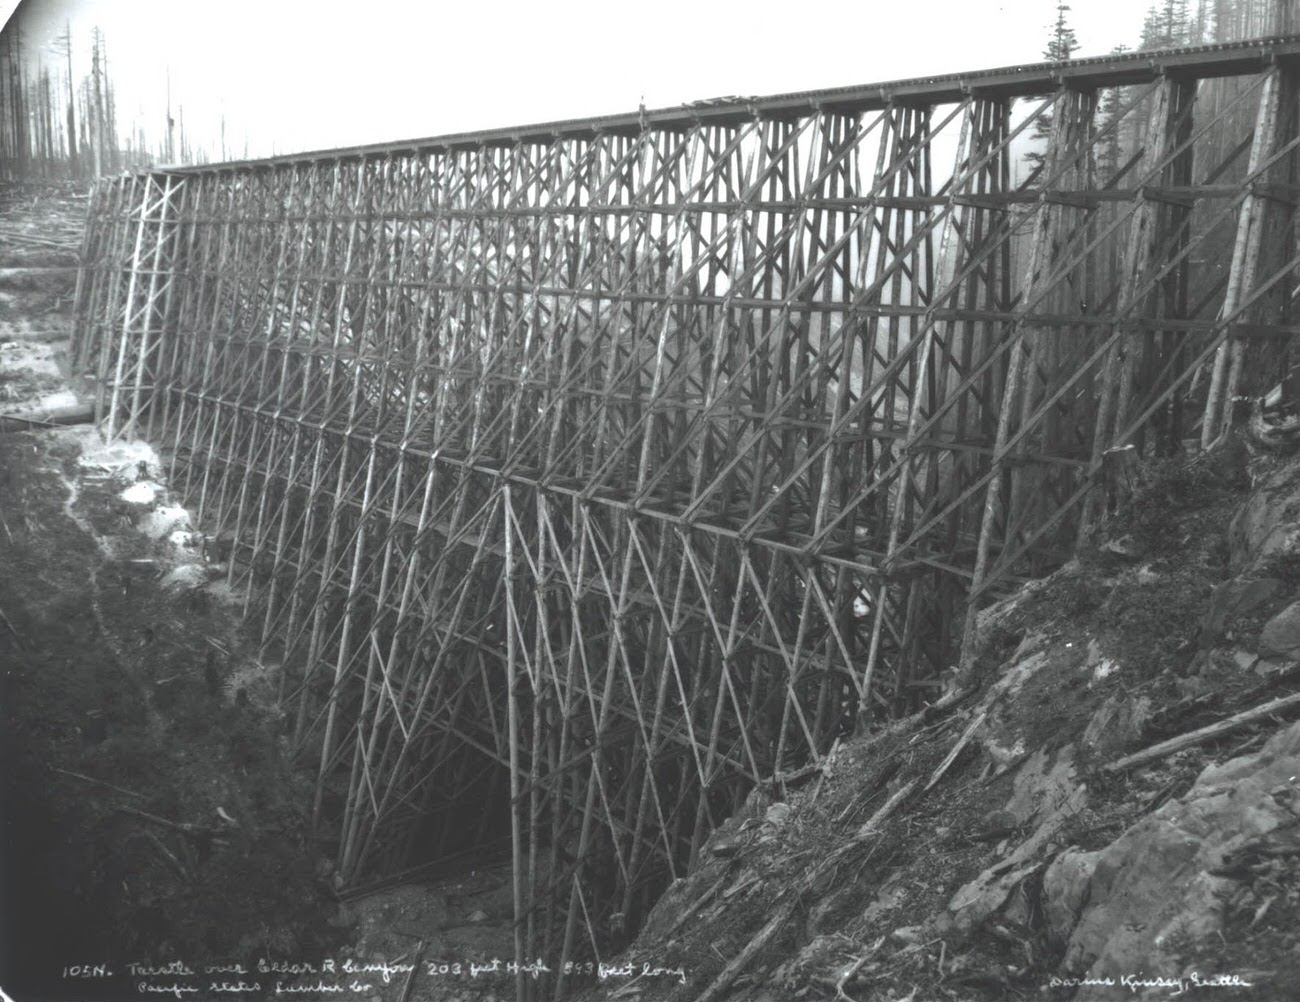 Cedar River logging trestle, 203 feet high & 843 feet long, Washington State, 1917.